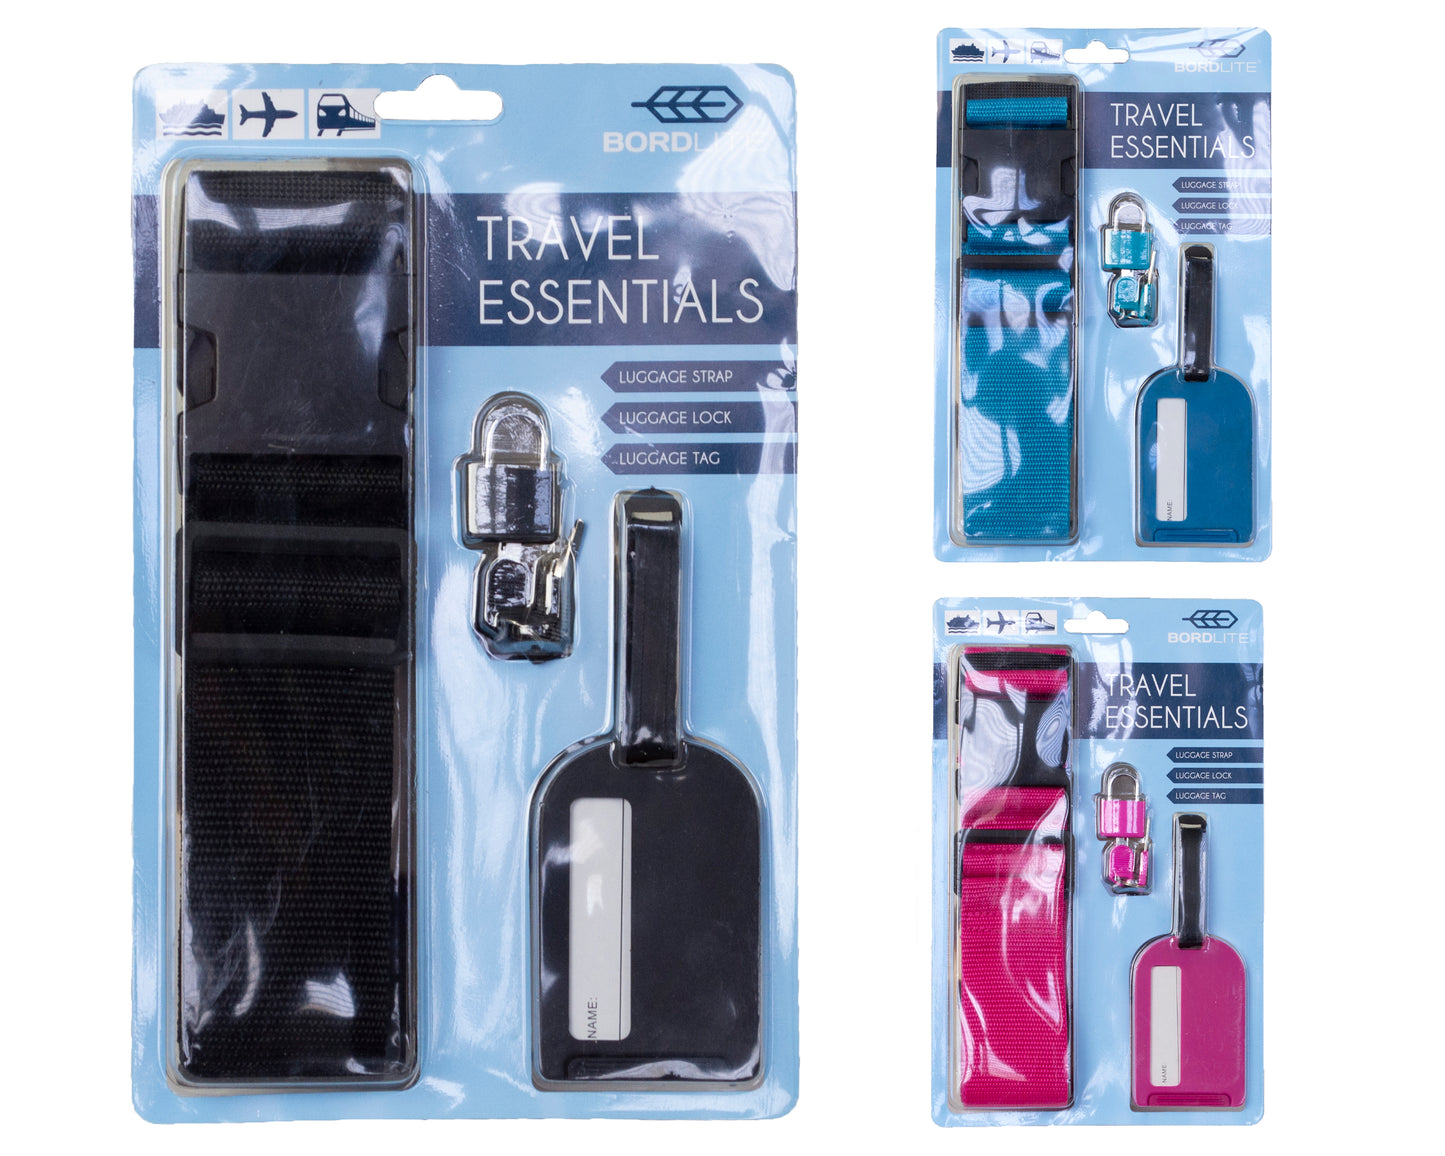 Travel Essentials Set: Luggage Strap, Tag and Lock